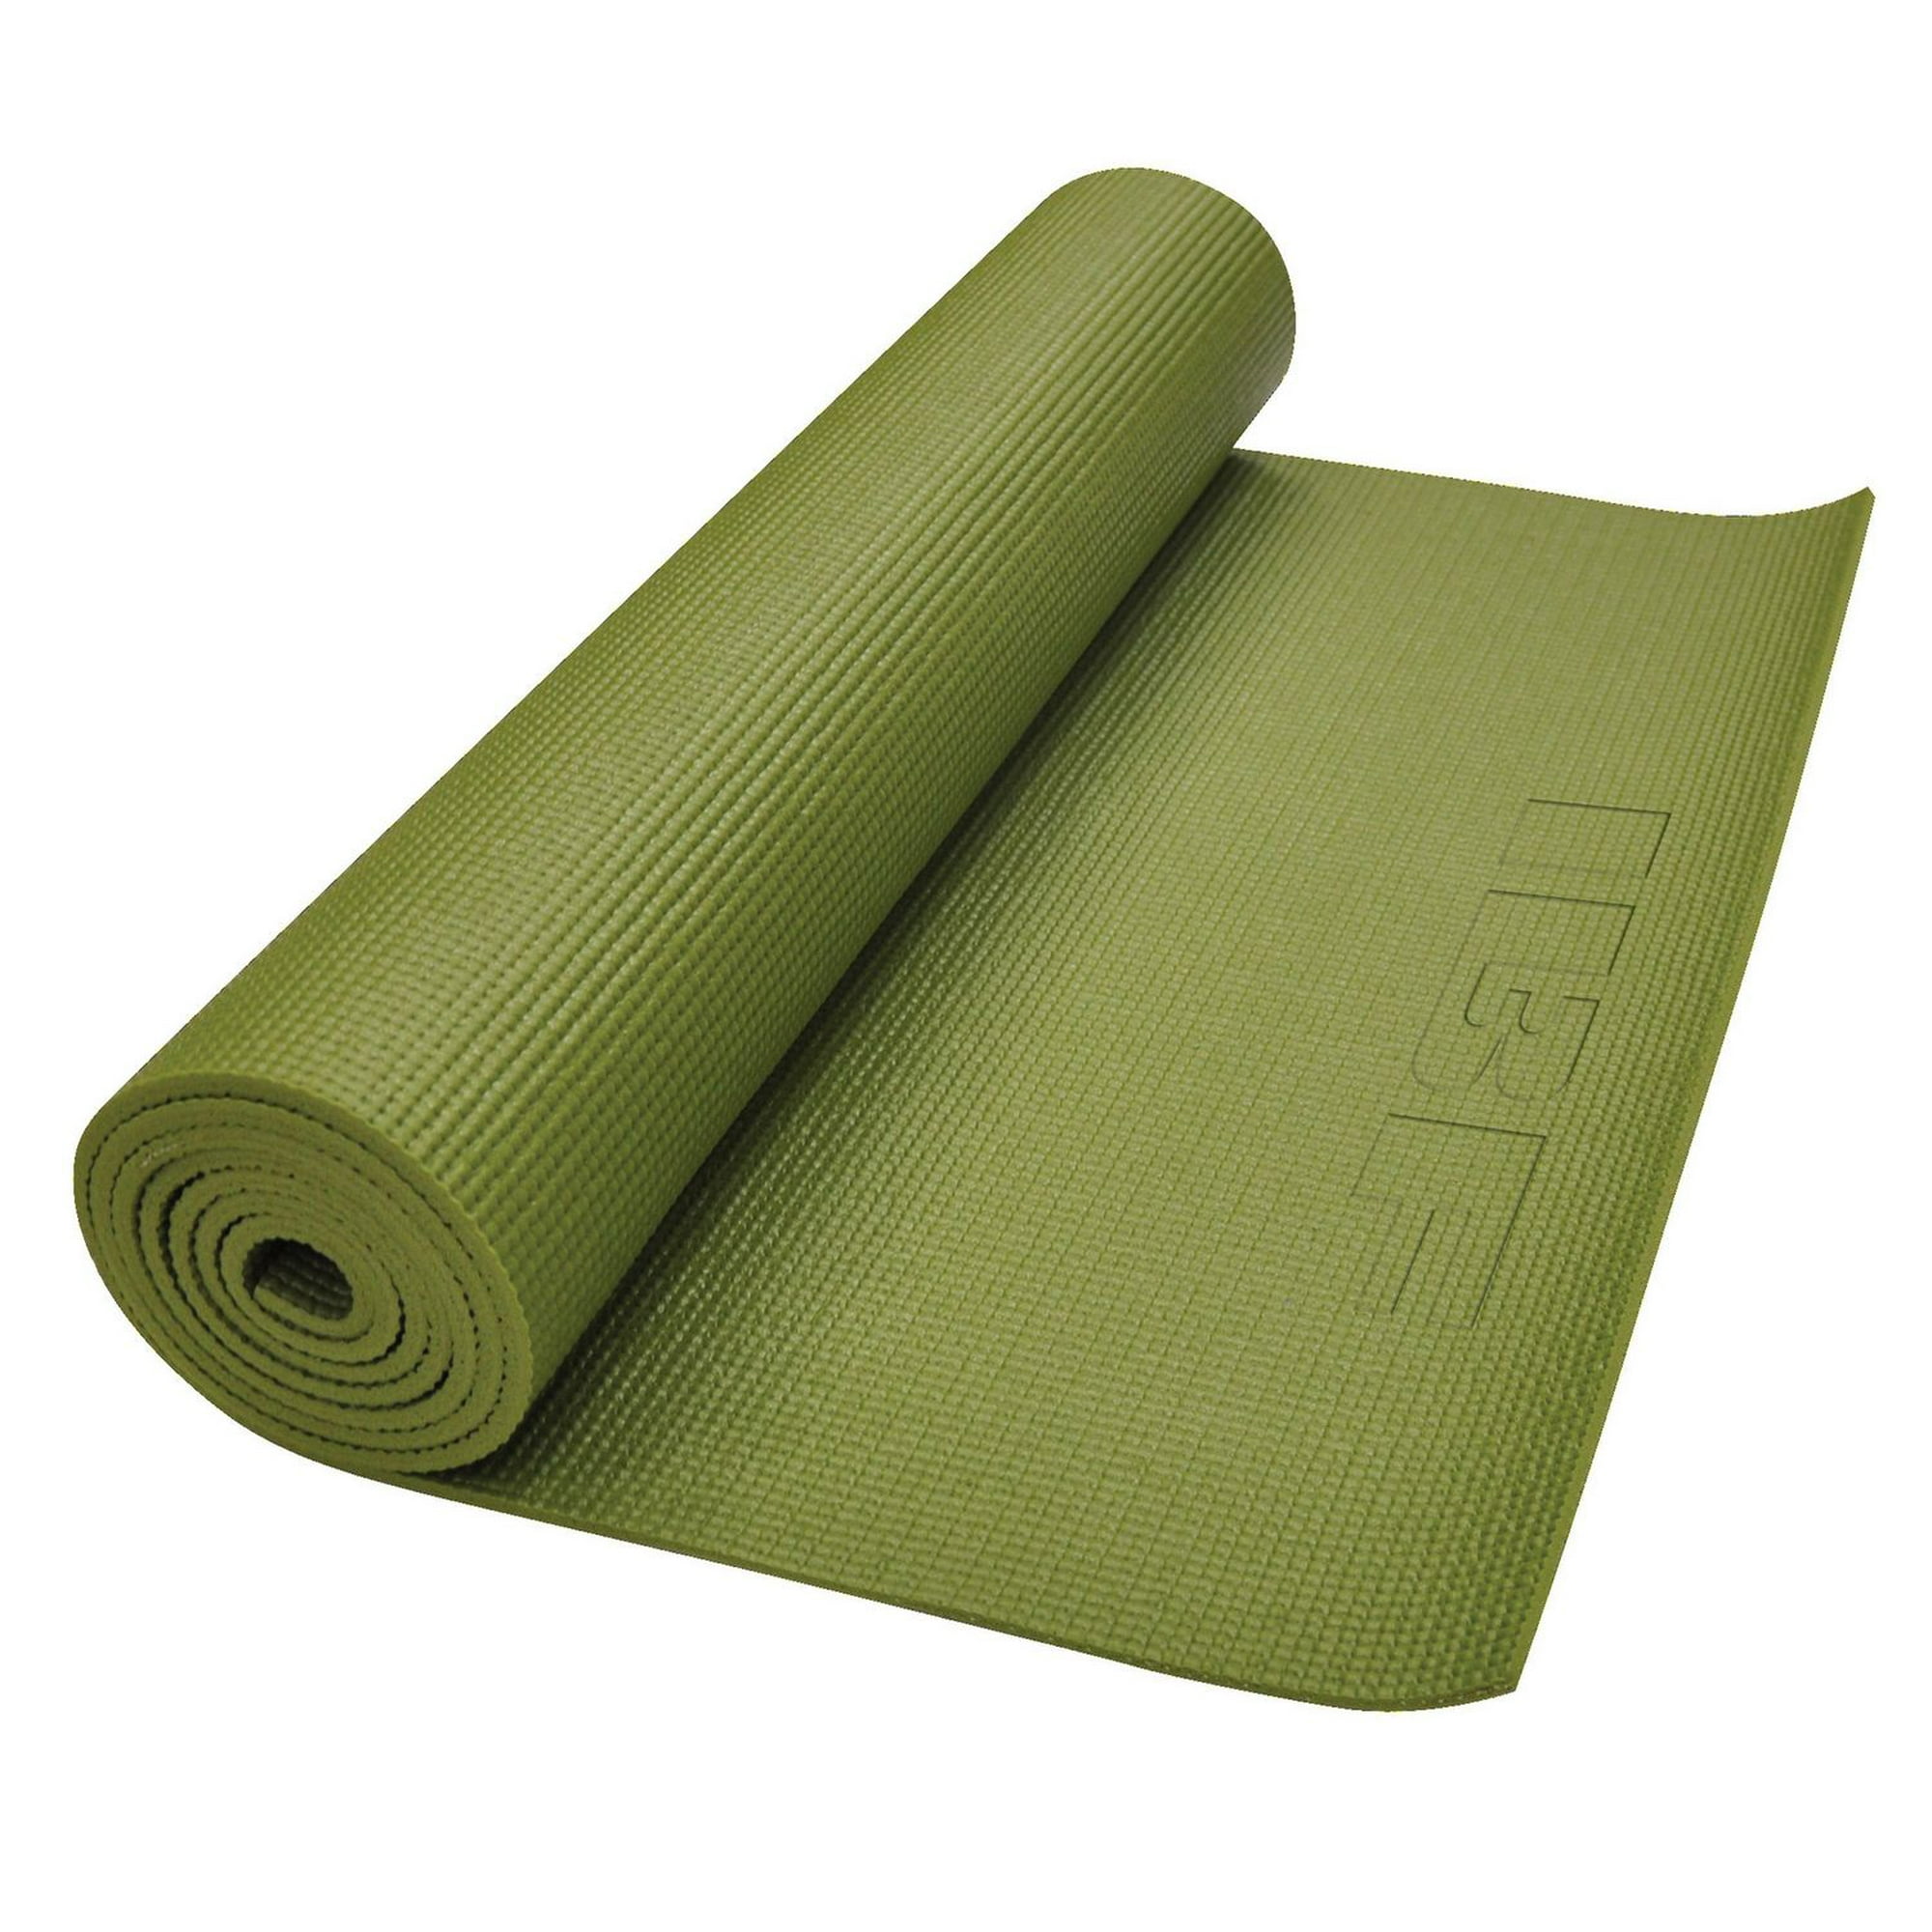 Yoga Mat Thick Non-slip Durable Exercise Extra Mats Pilates Pad Fitness Gym  MINI